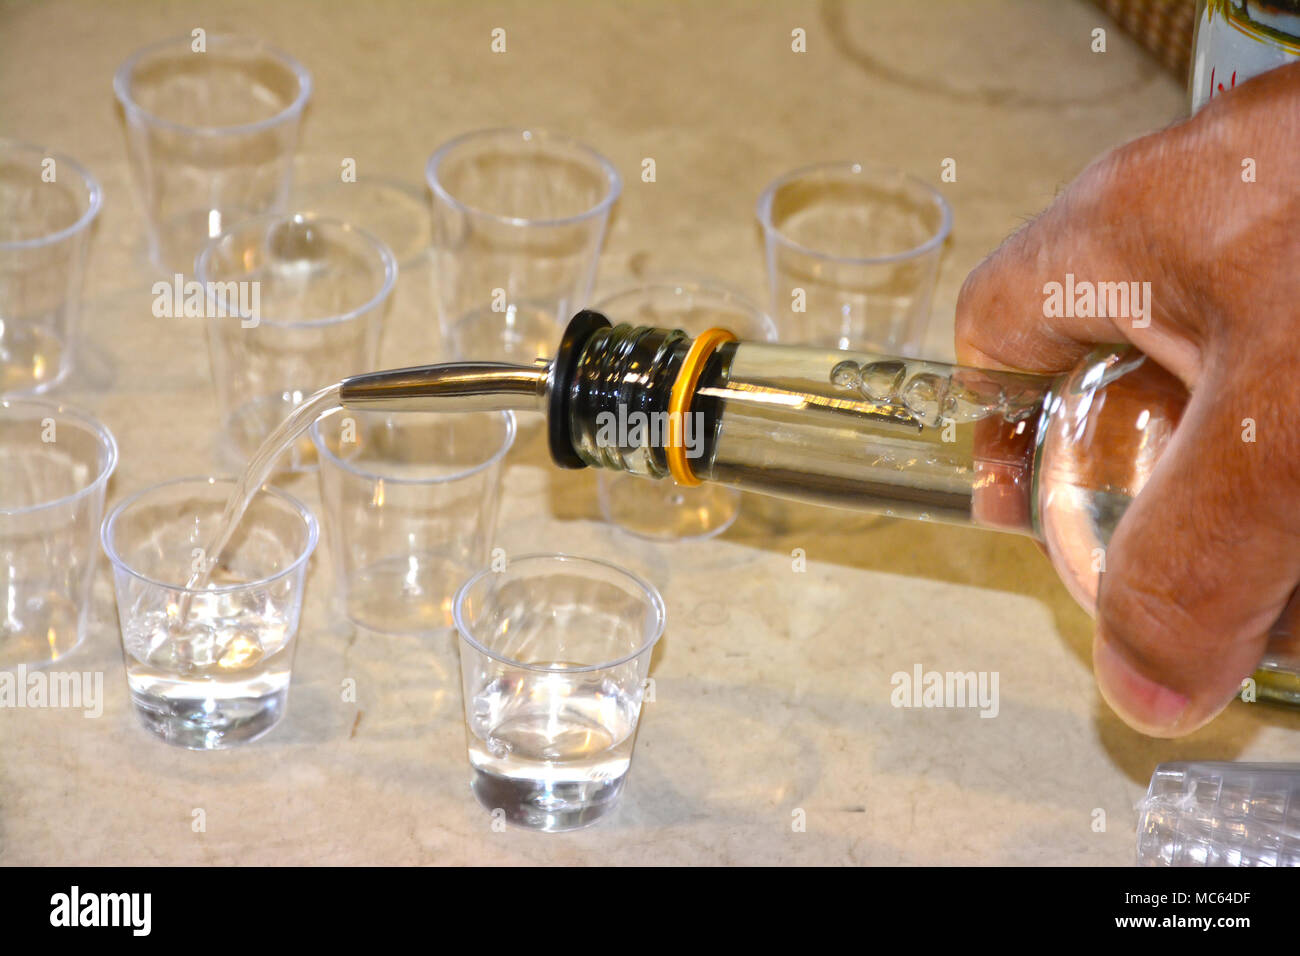 Pouring Arak into glasses Stock Photo